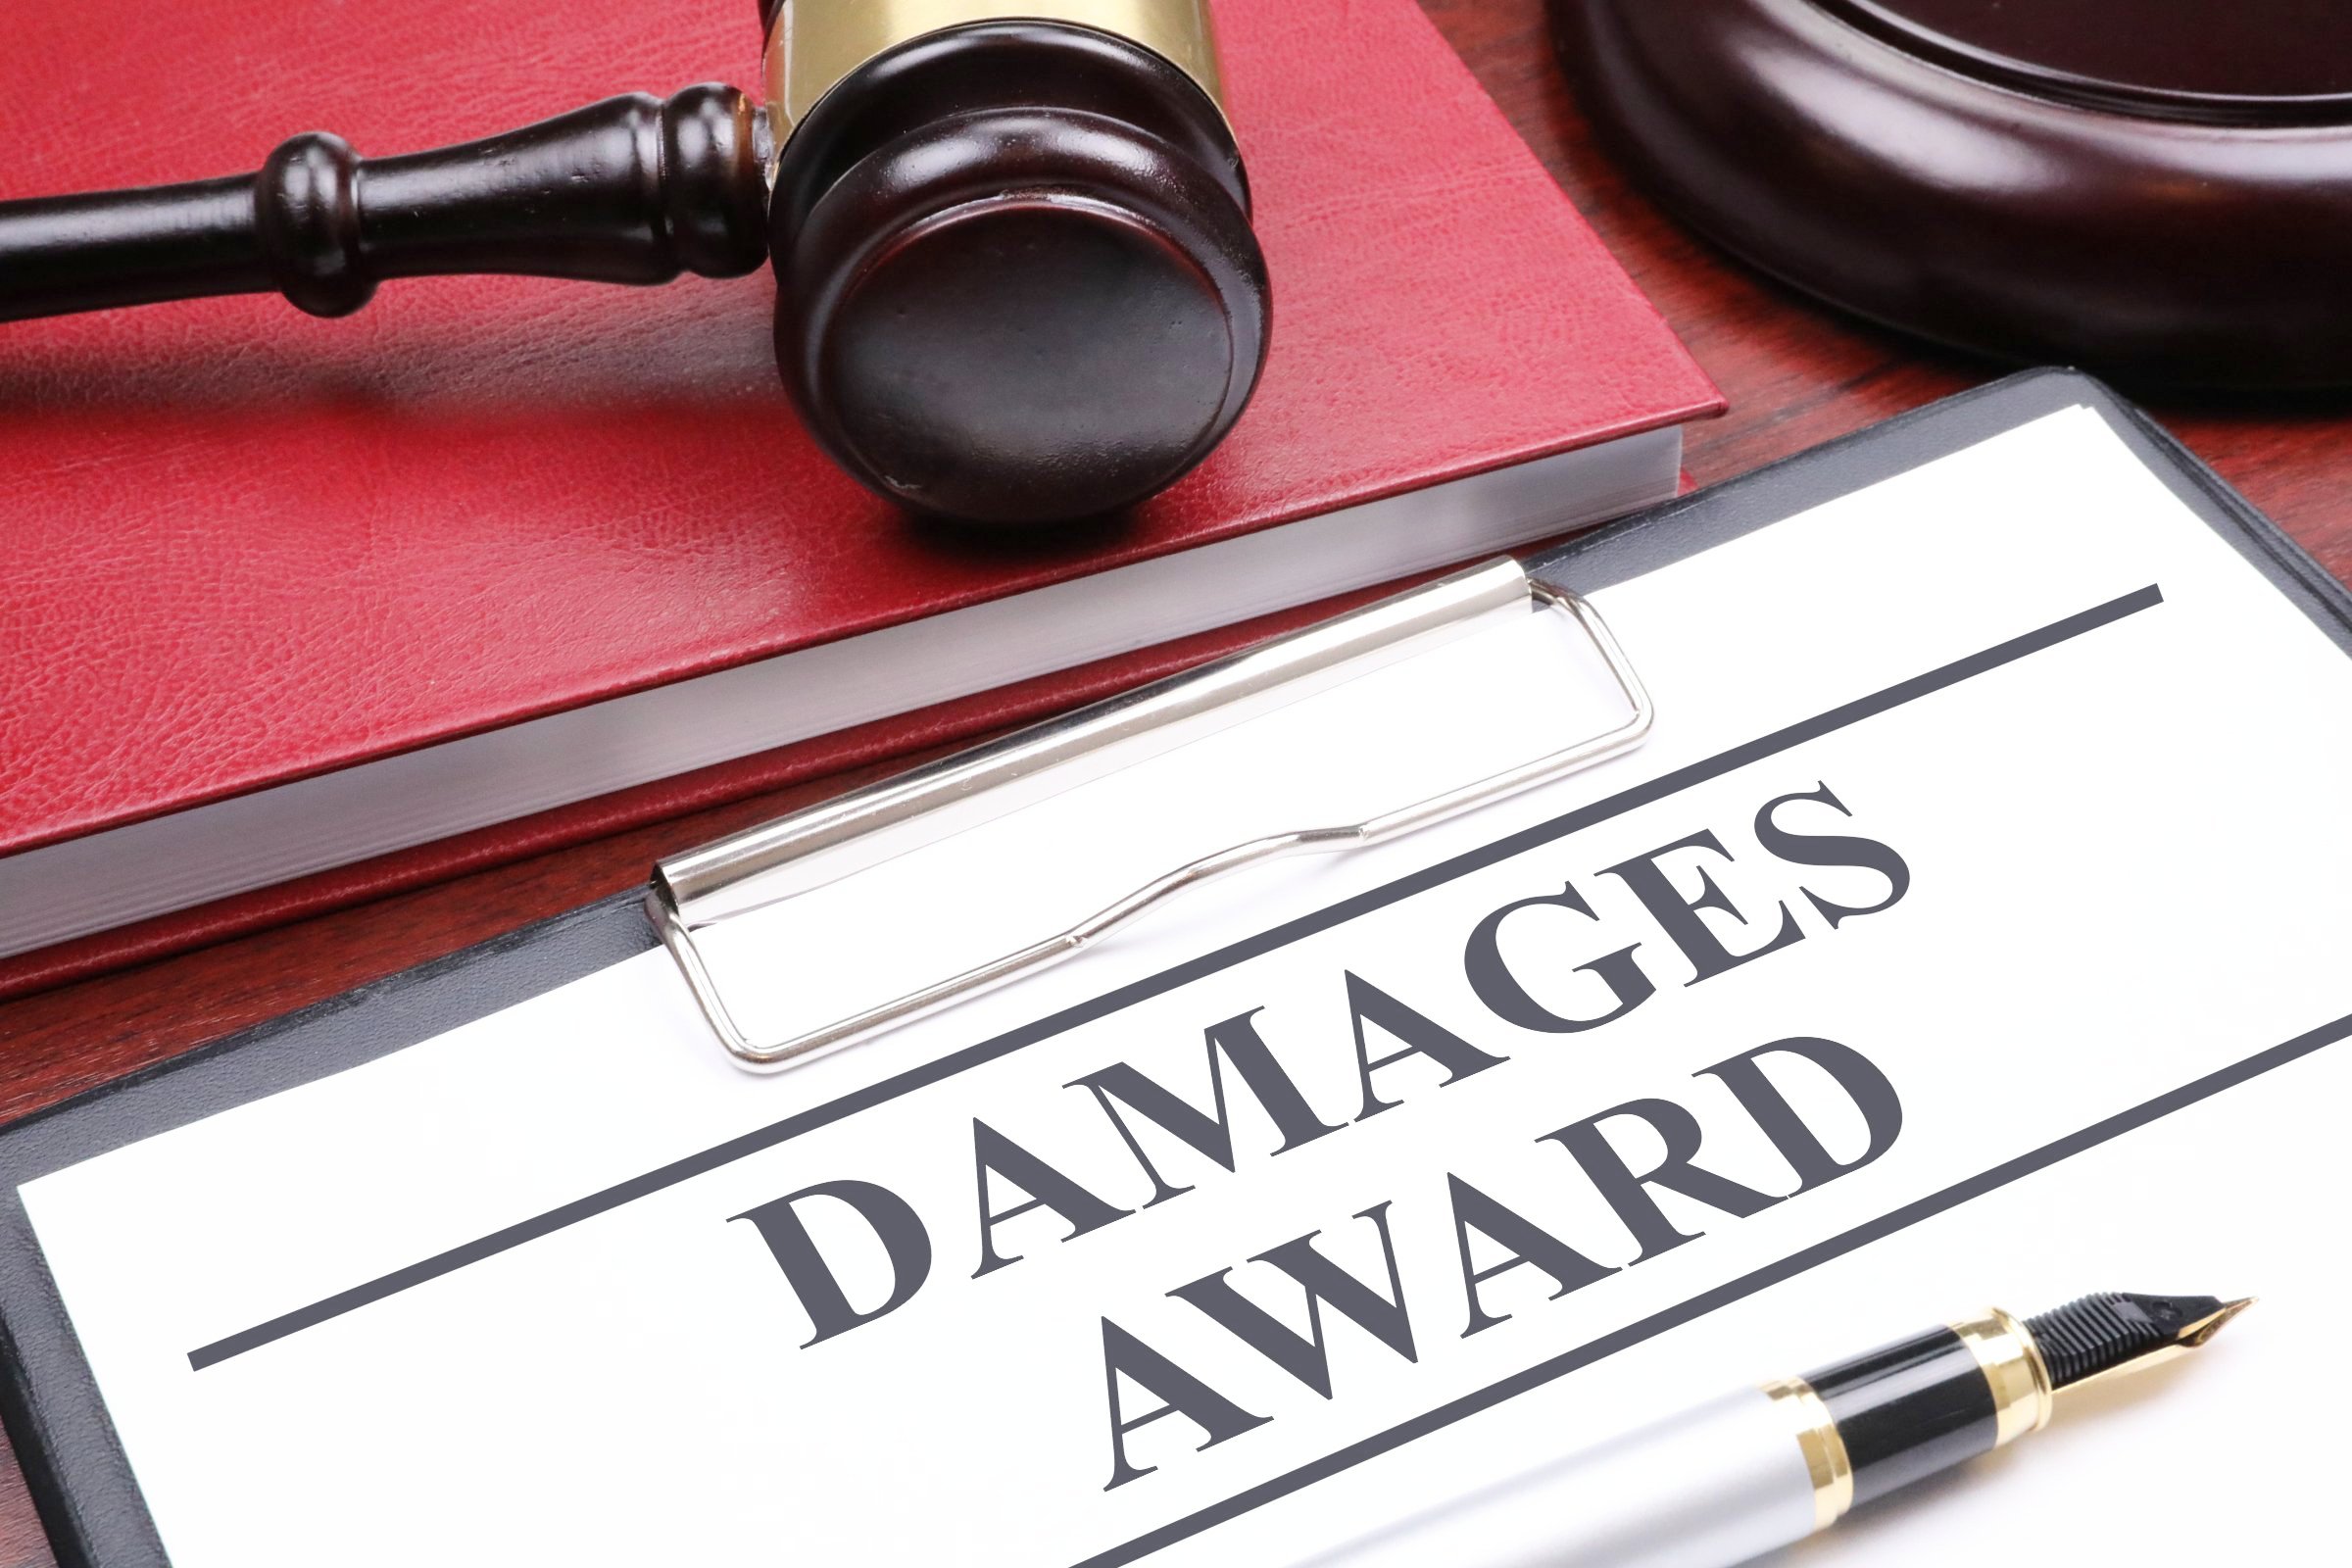 damages award